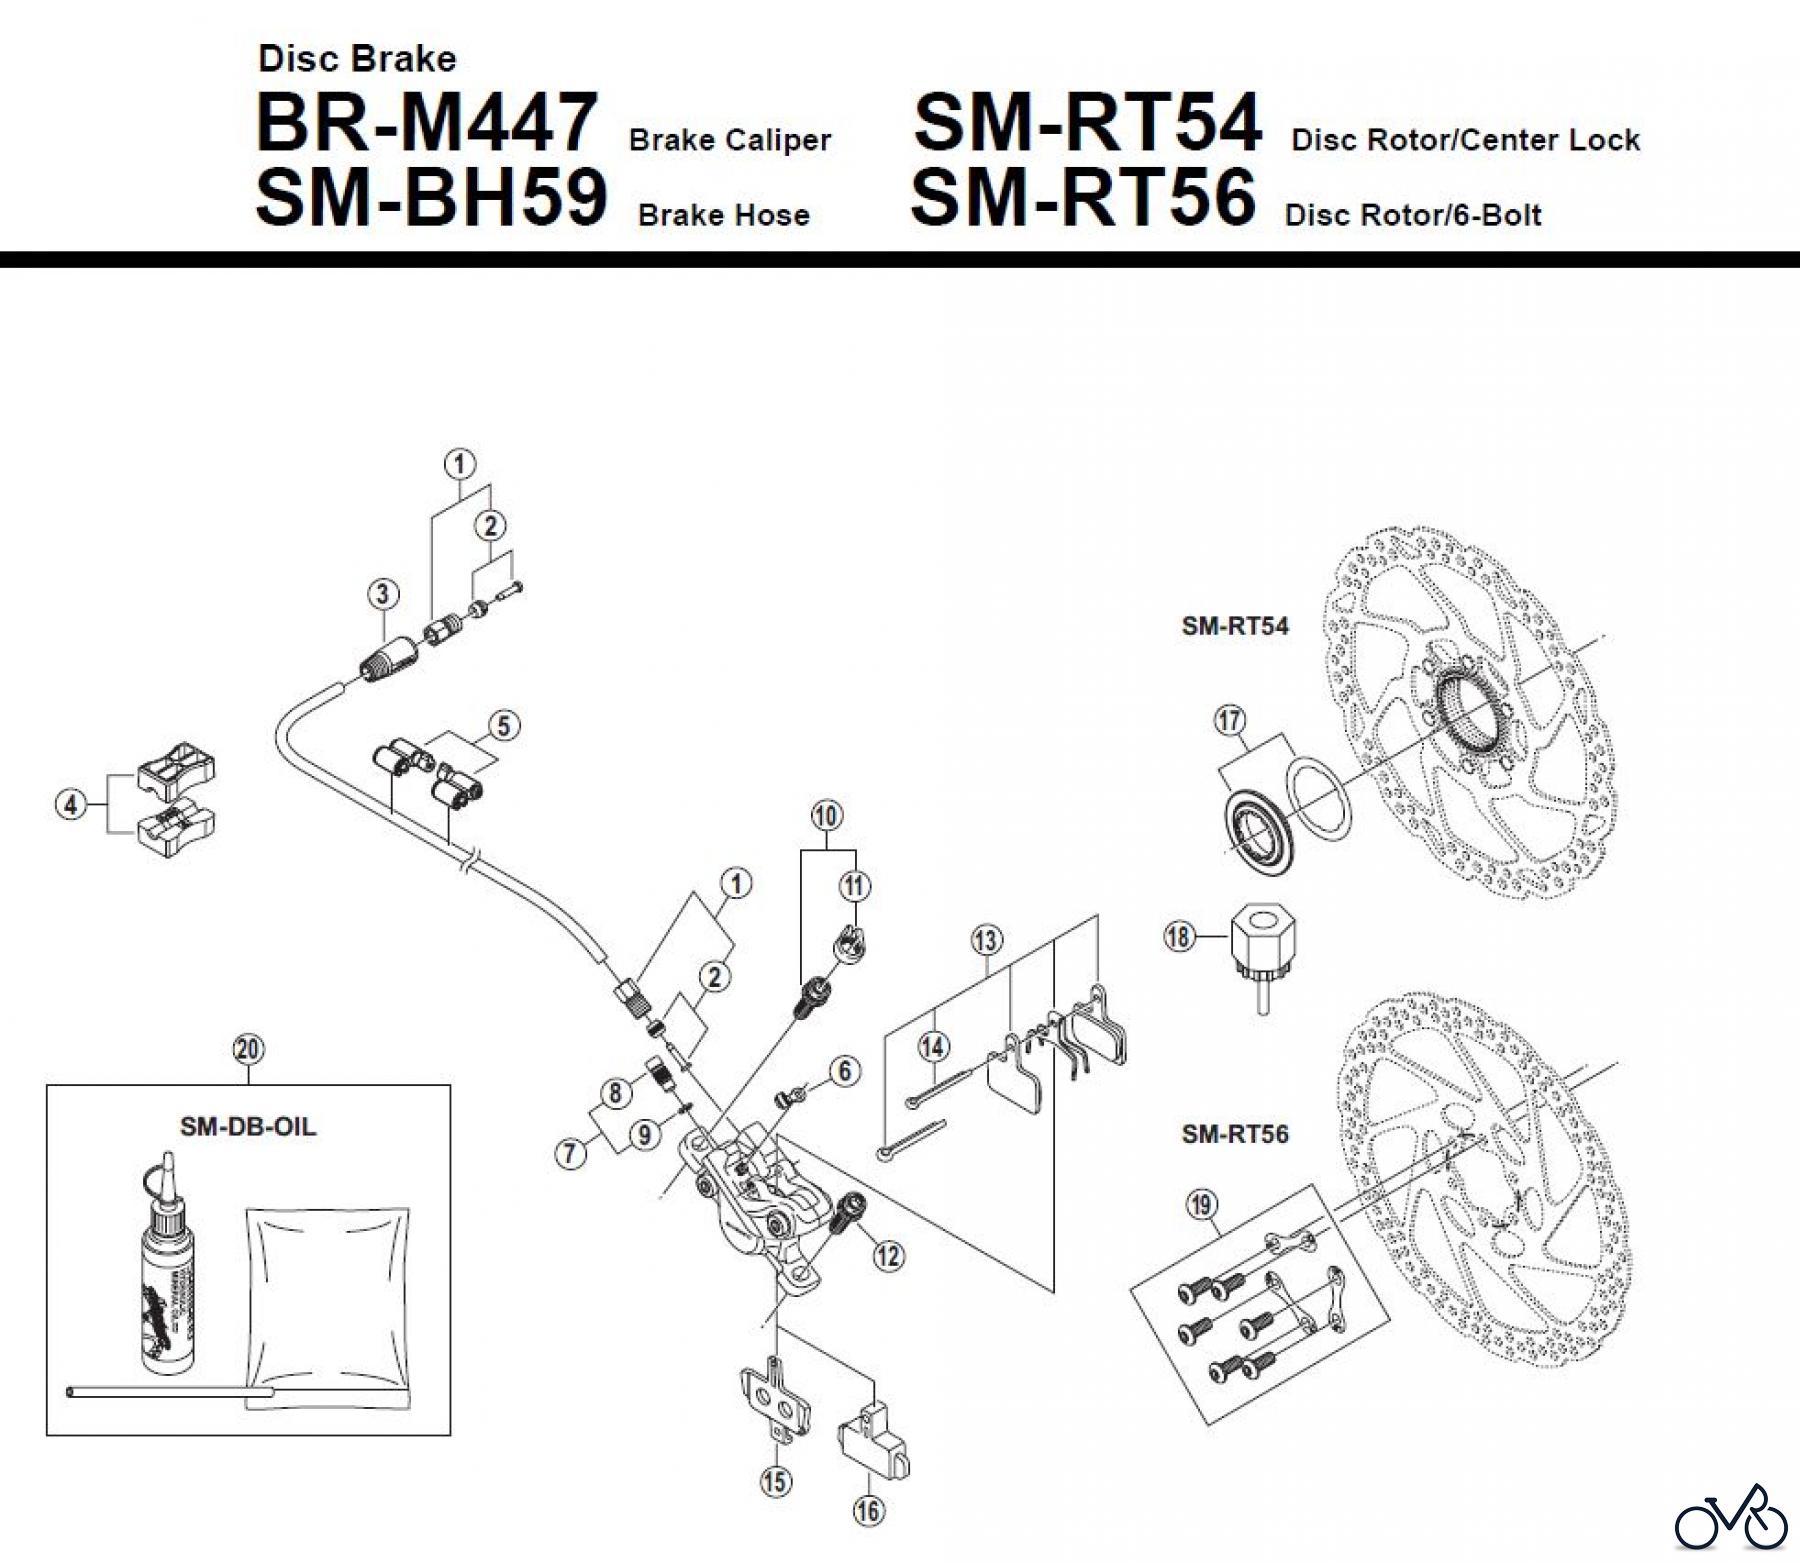  Shimano BR Brake - Bremse BR-M447 Disc Brake